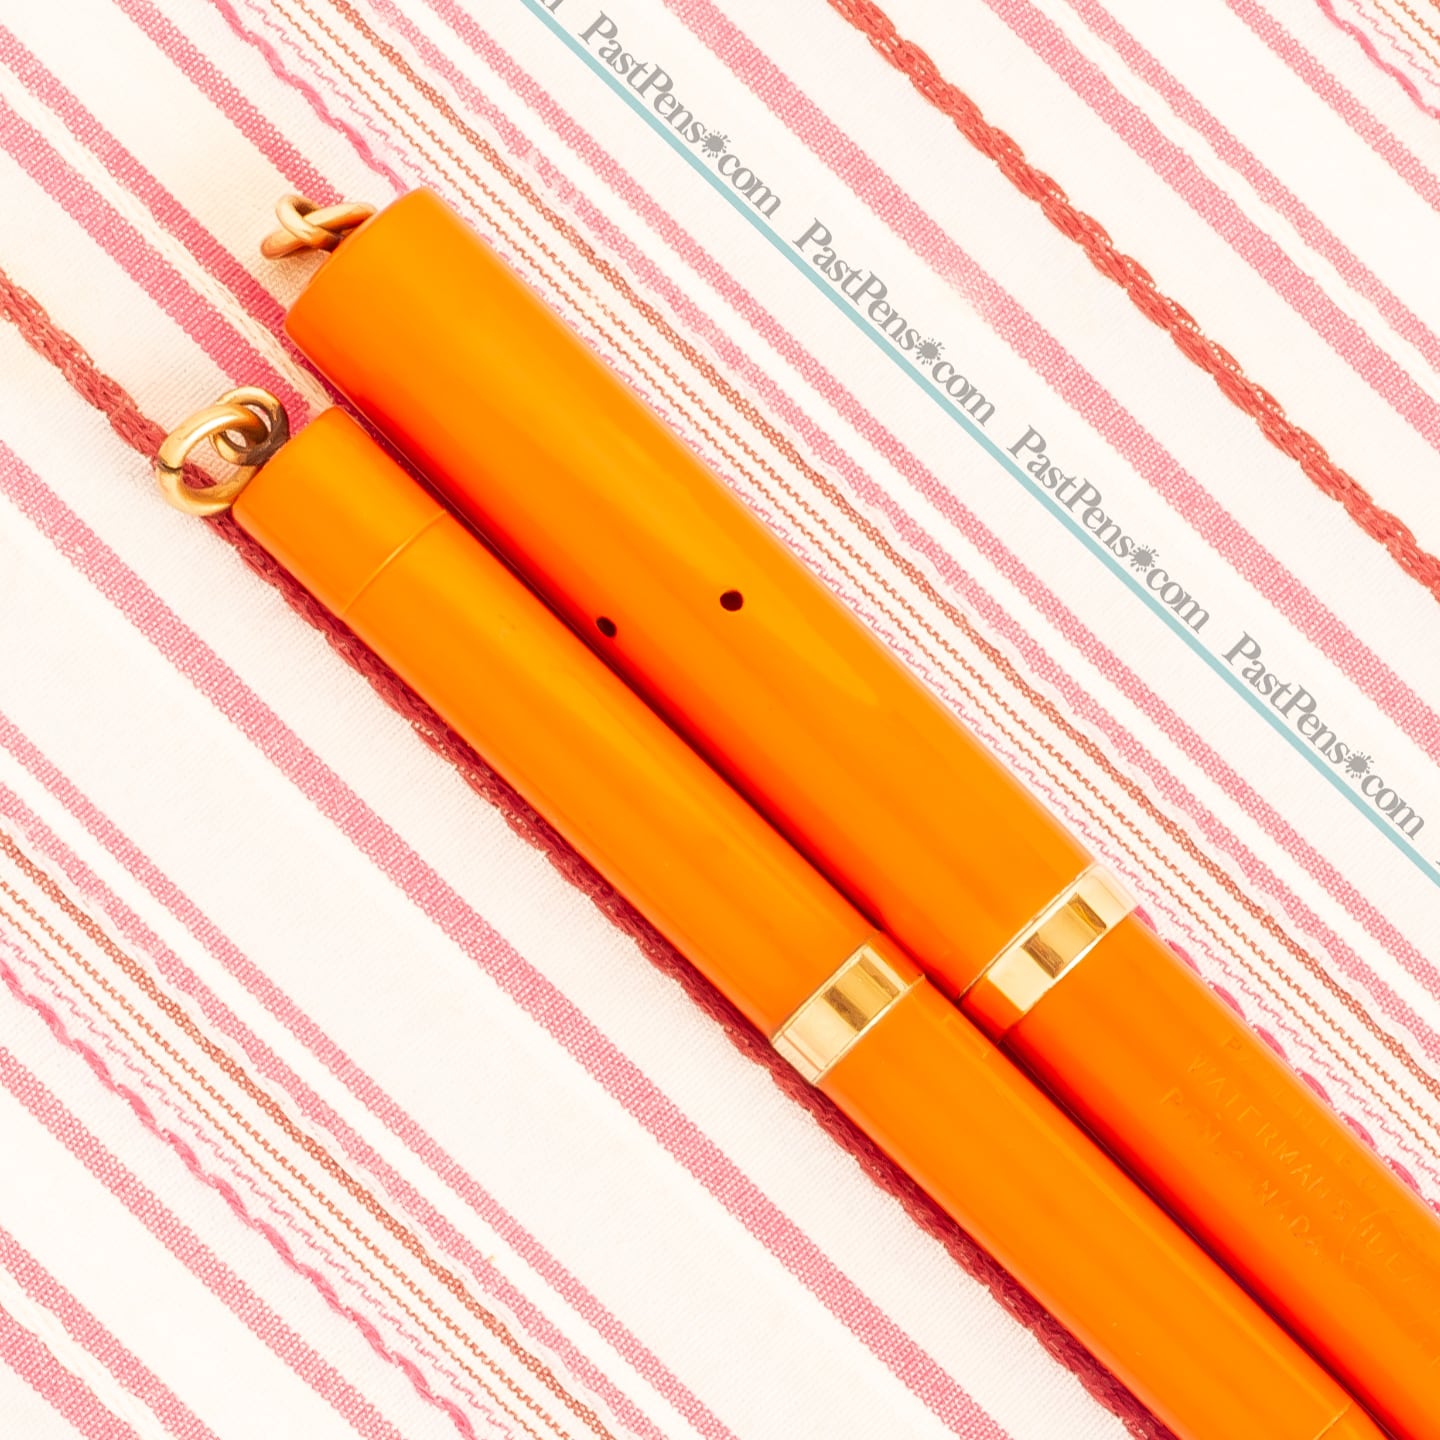 waterman ideal cardinal red rubber pen pencil set wm158